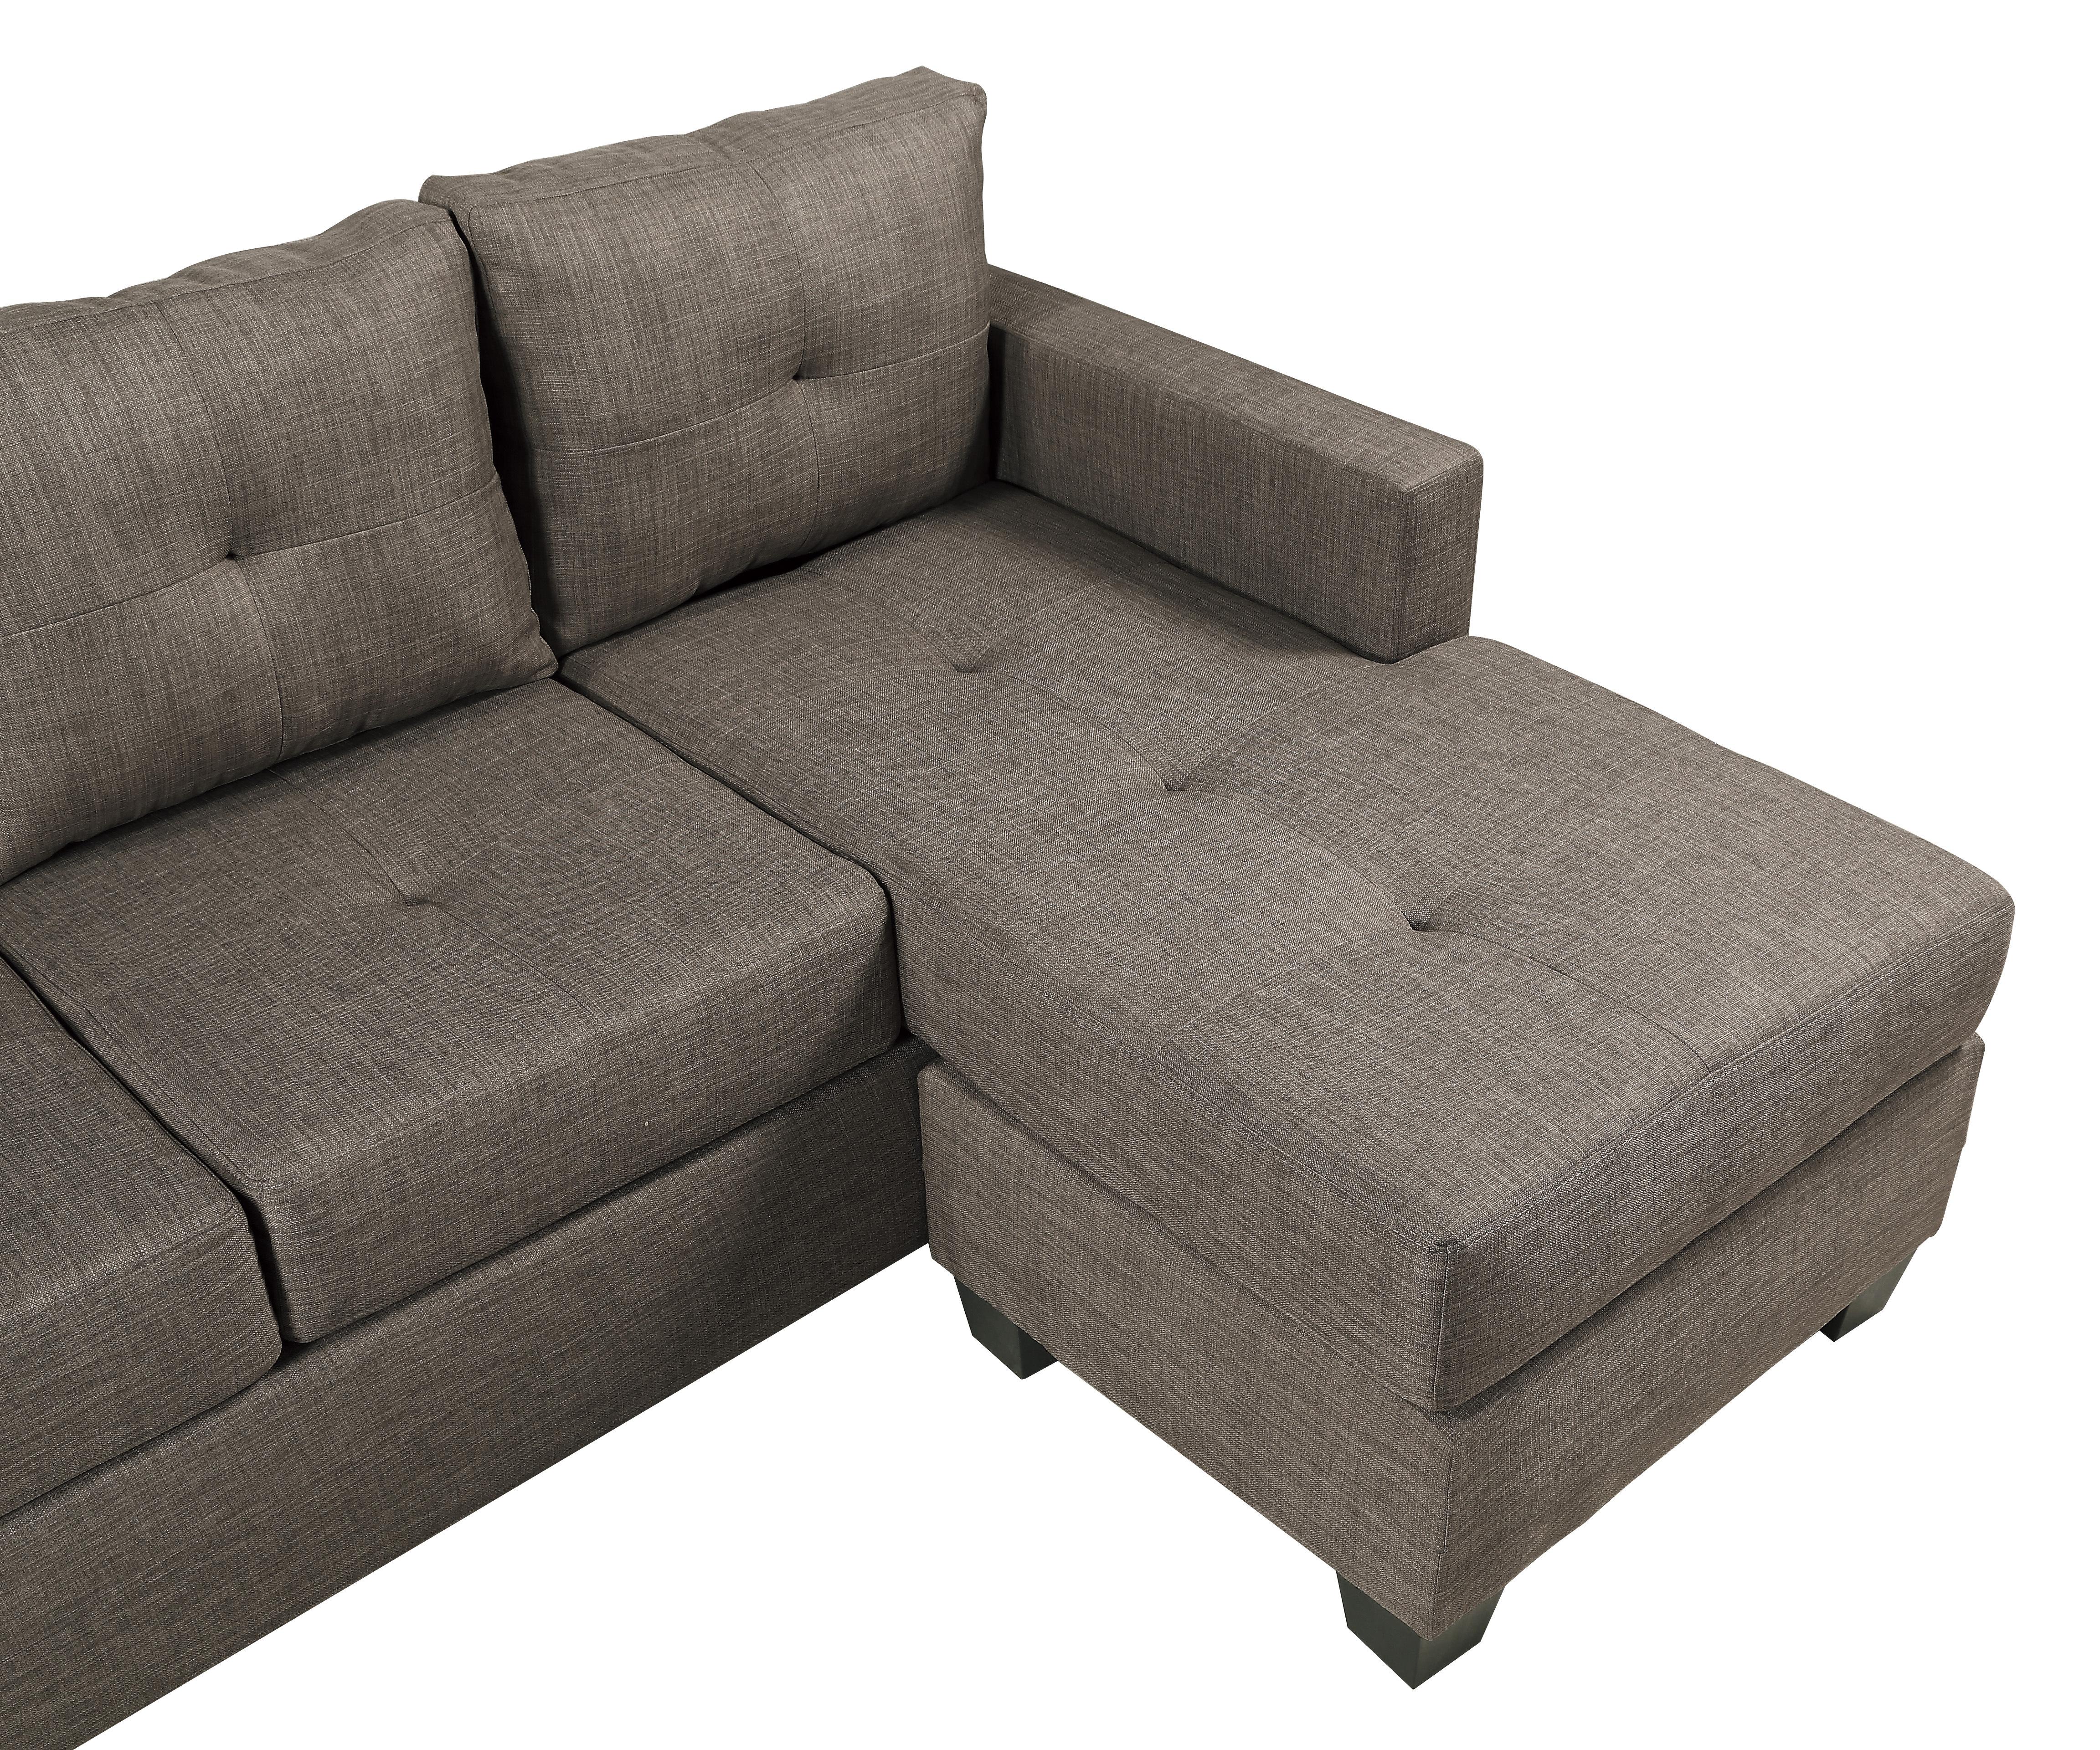 

    
9789BRG*2OT Transitional Brown Textured Resersible Sofa w/Ottoman Homelegance 9789BRG*2OT Phelps
